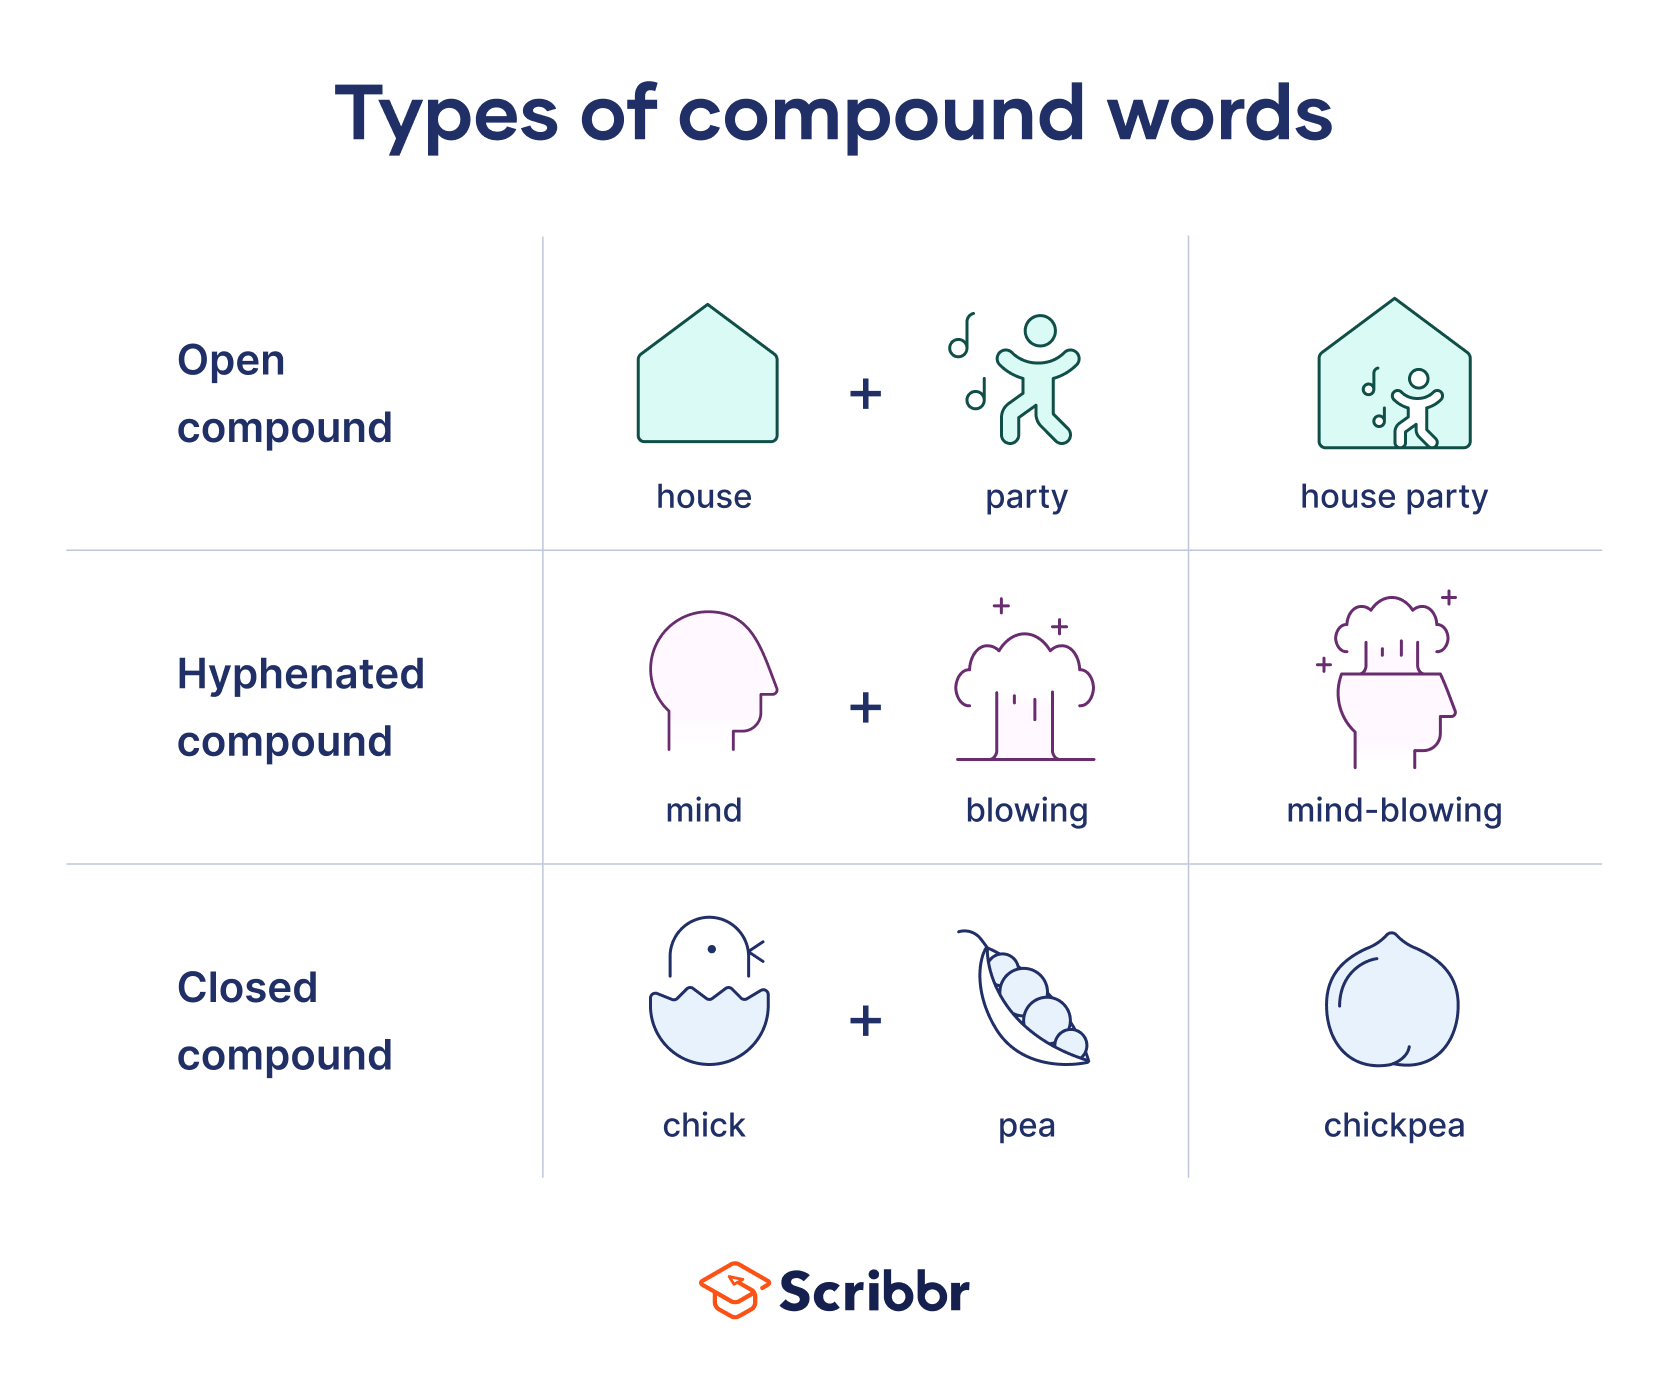 compound-words-types-list-definition